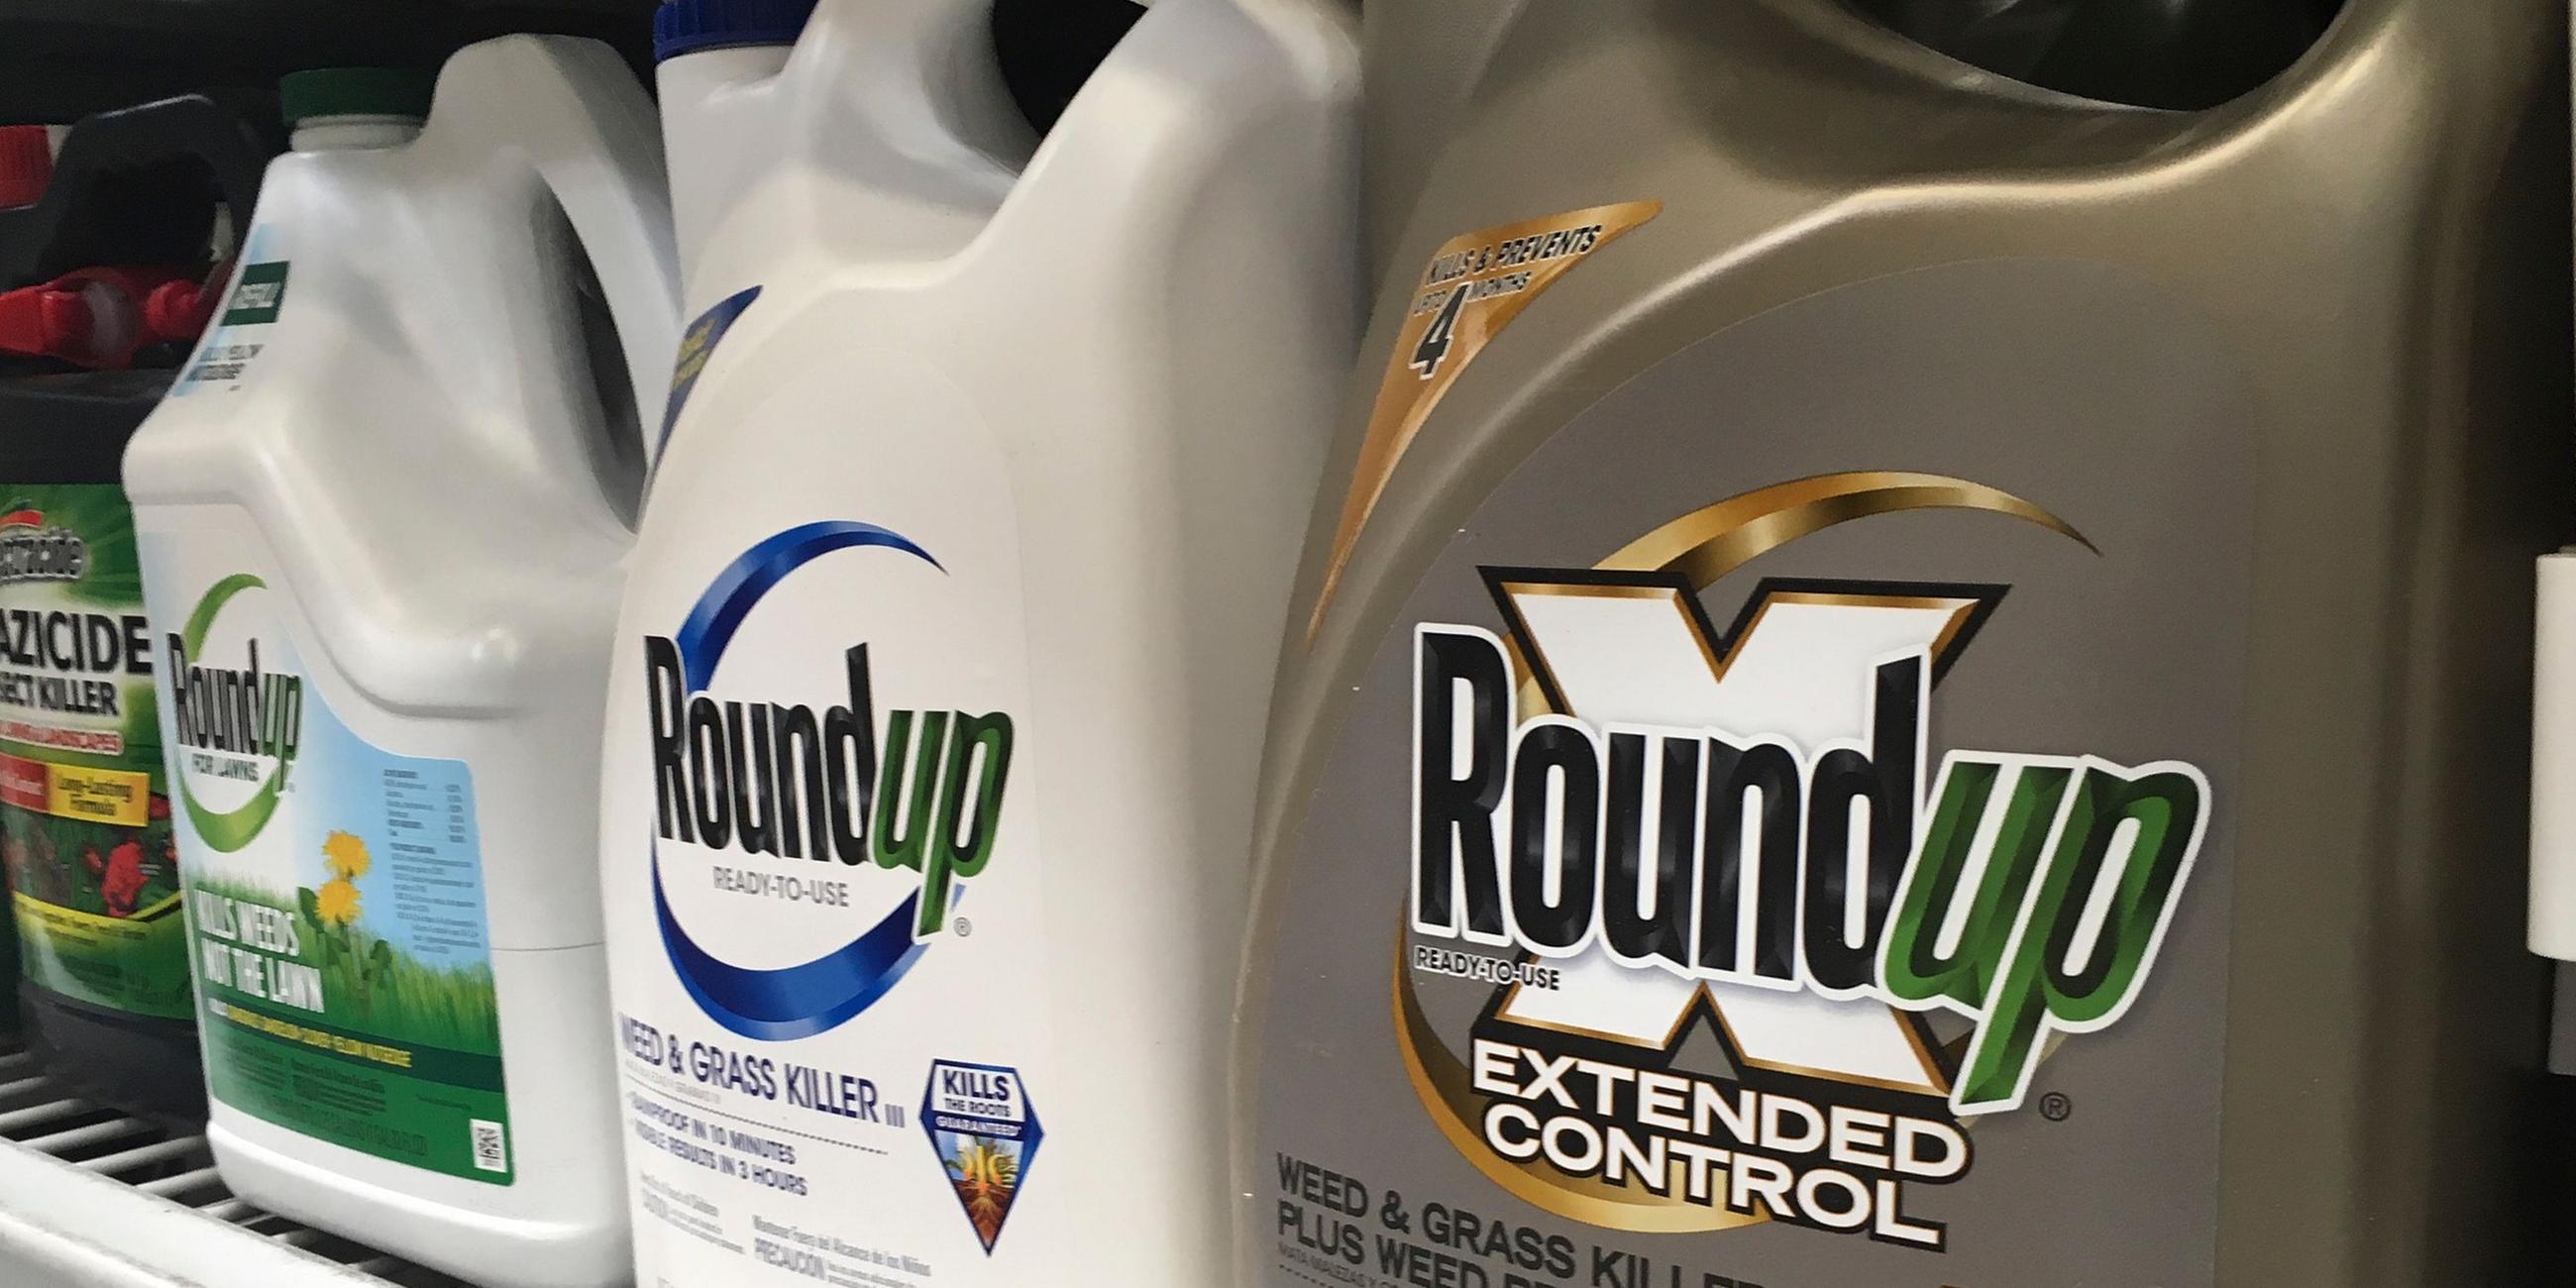 Roundup von Monsanto